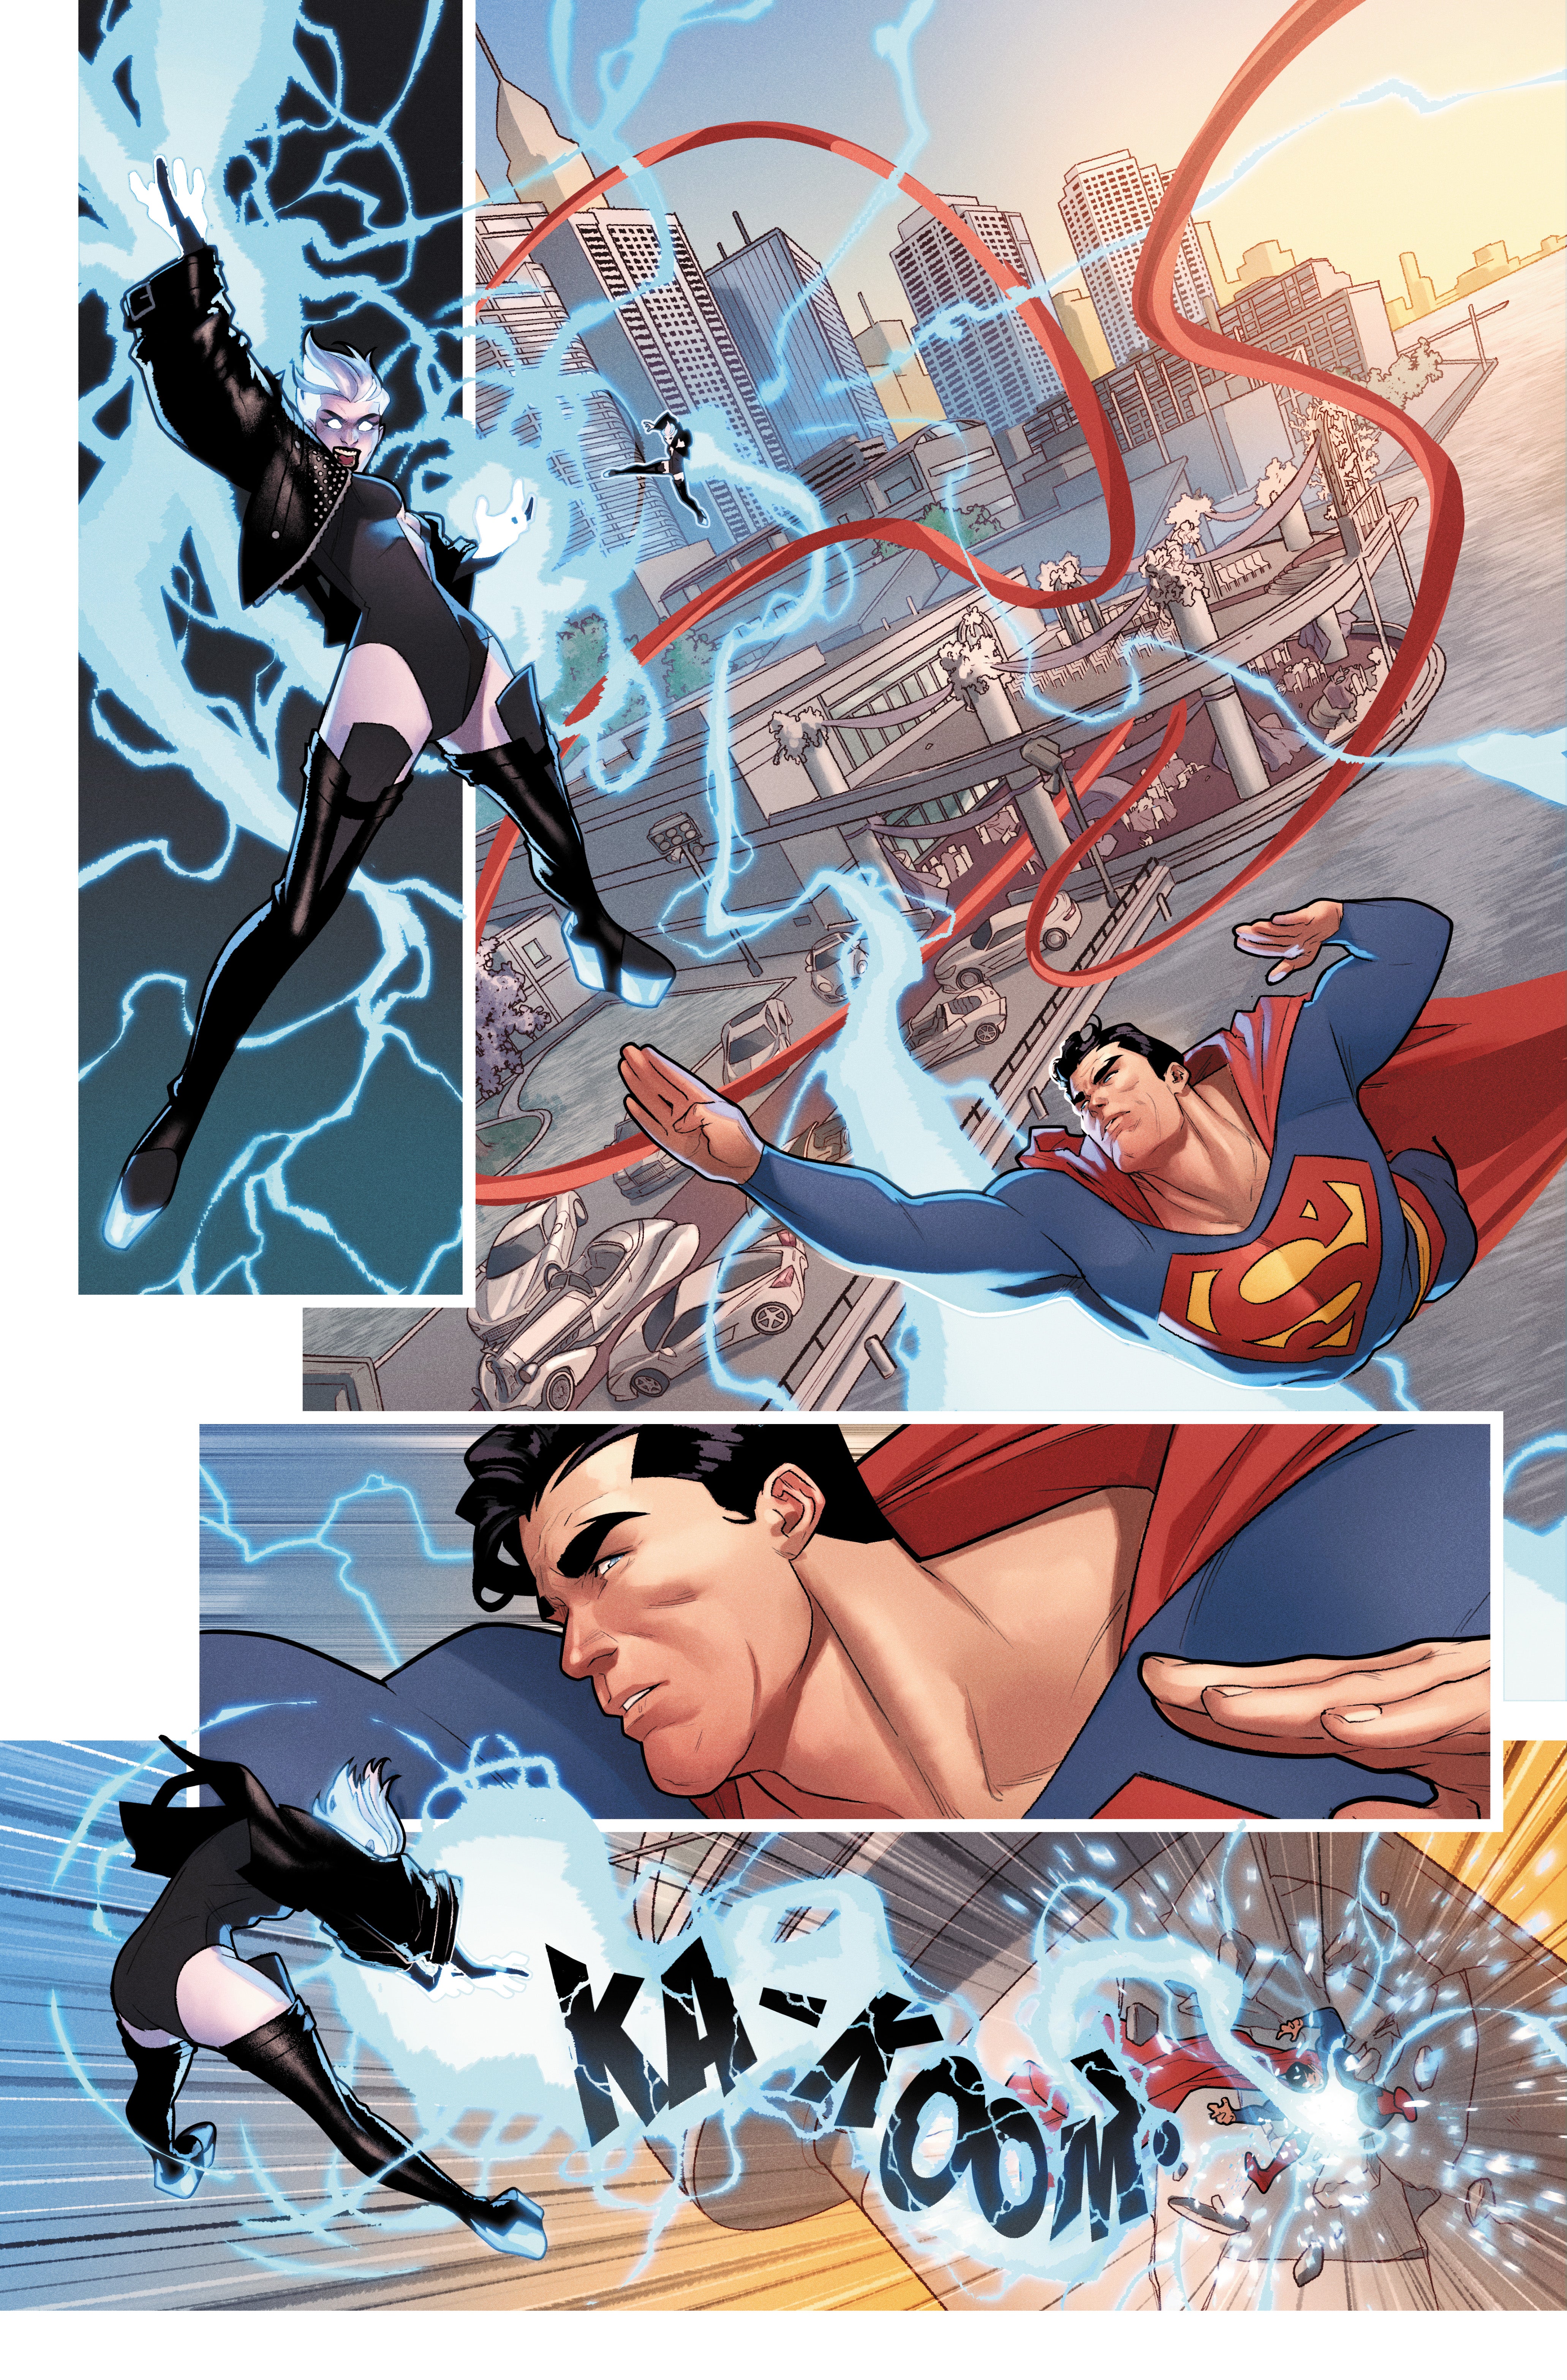 Superman battles Livewire over Metropolis